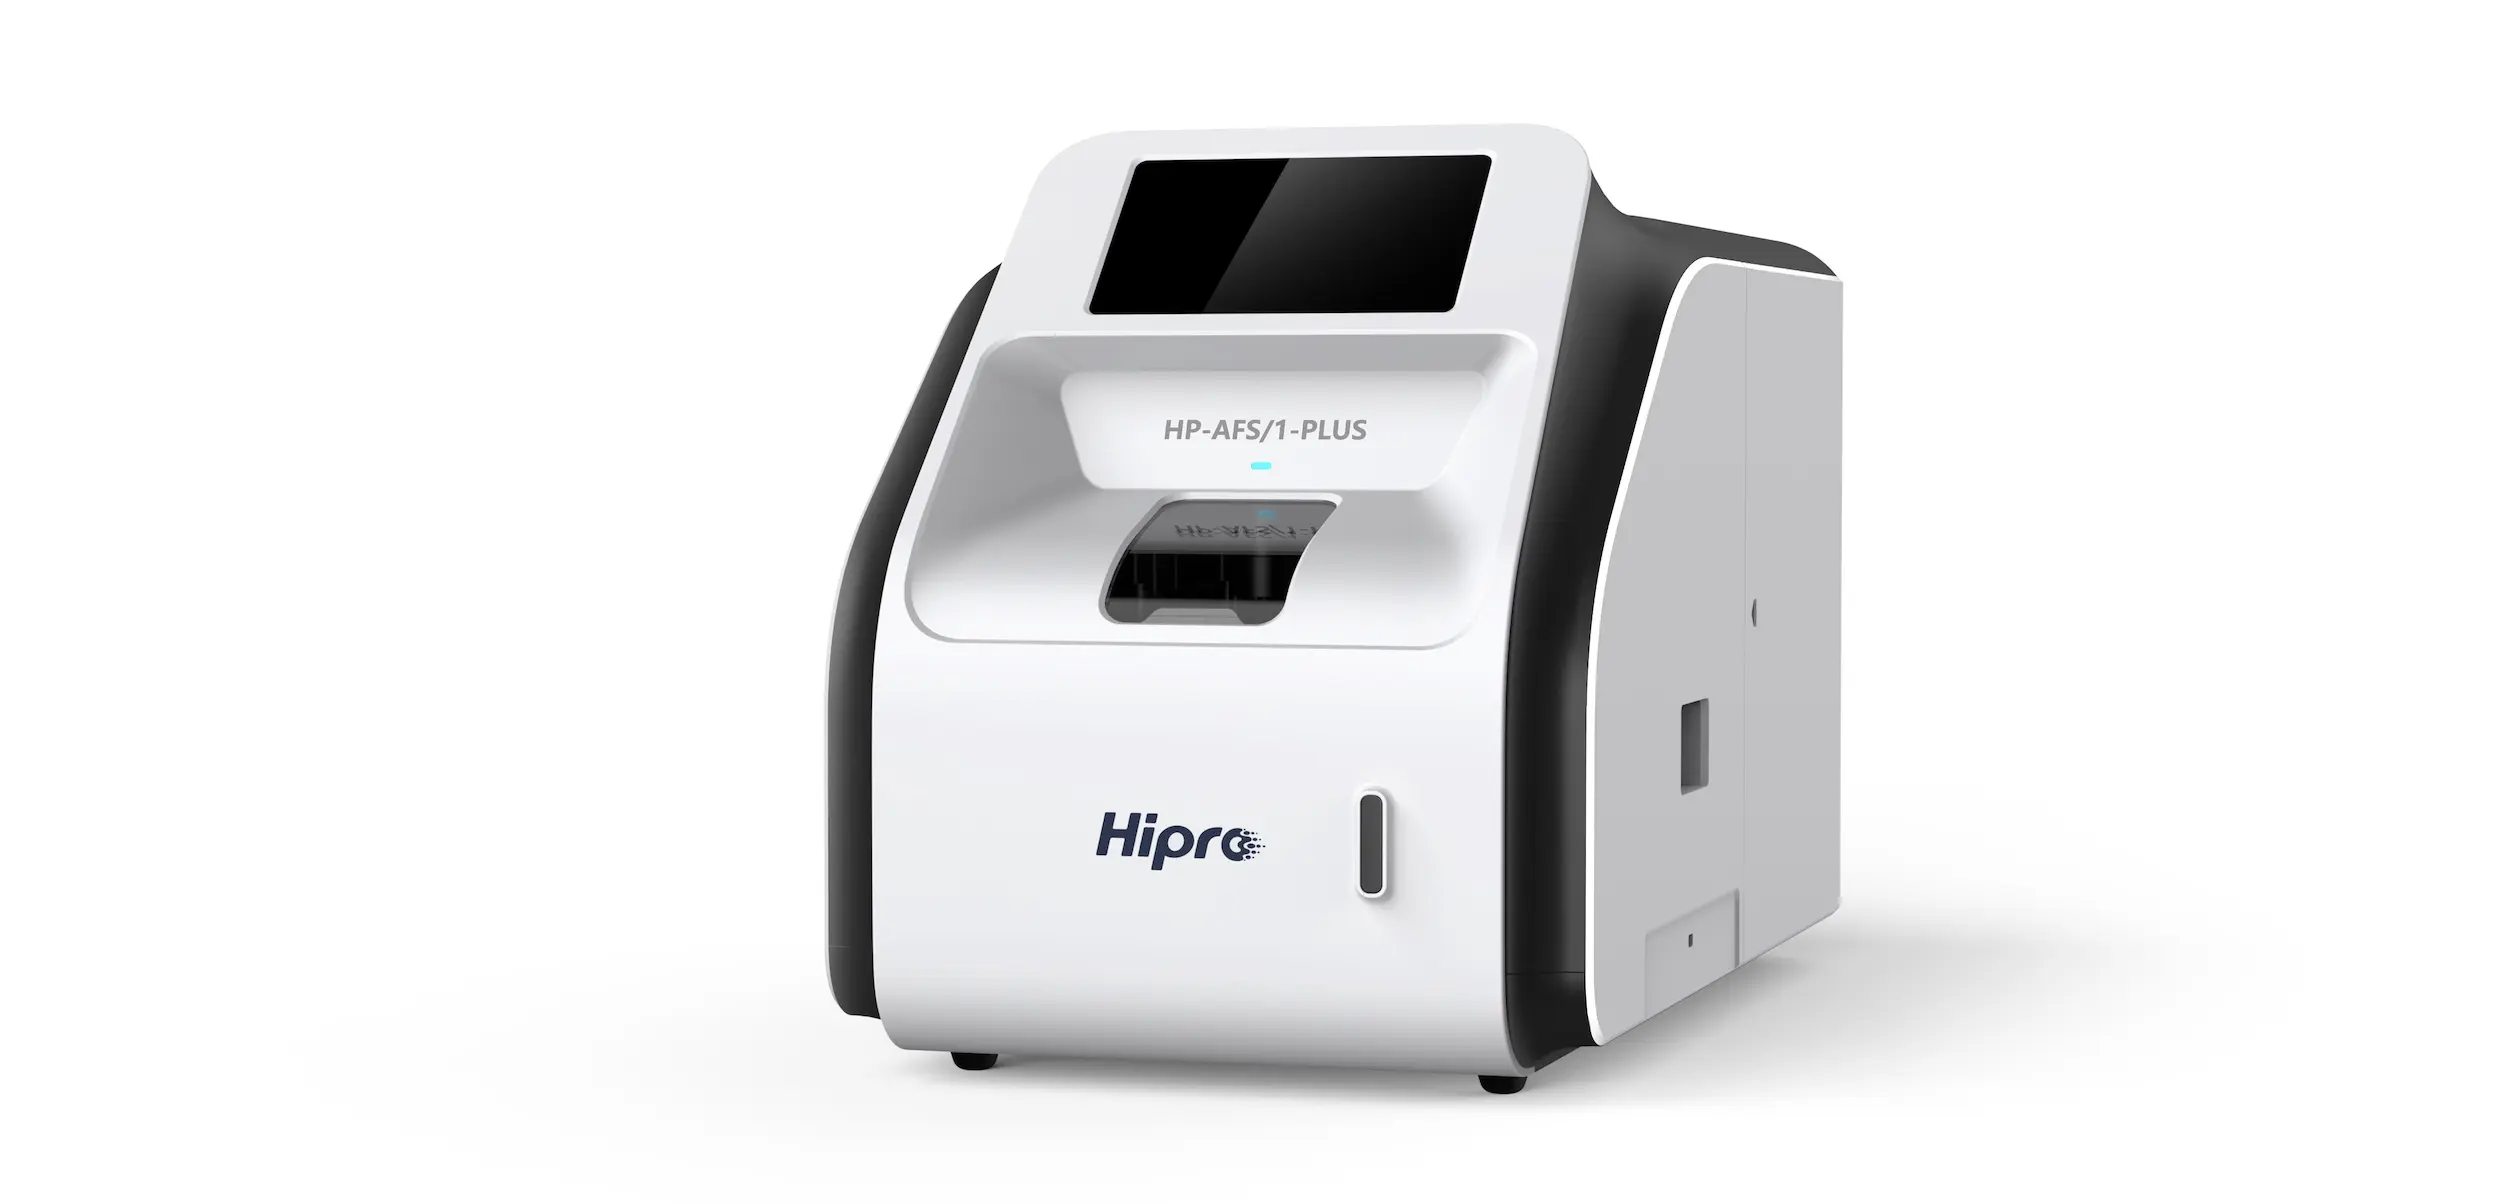 Hipro A1 PLUS AFS/1 PLUS Fully Automated Immunoassay Analyzer